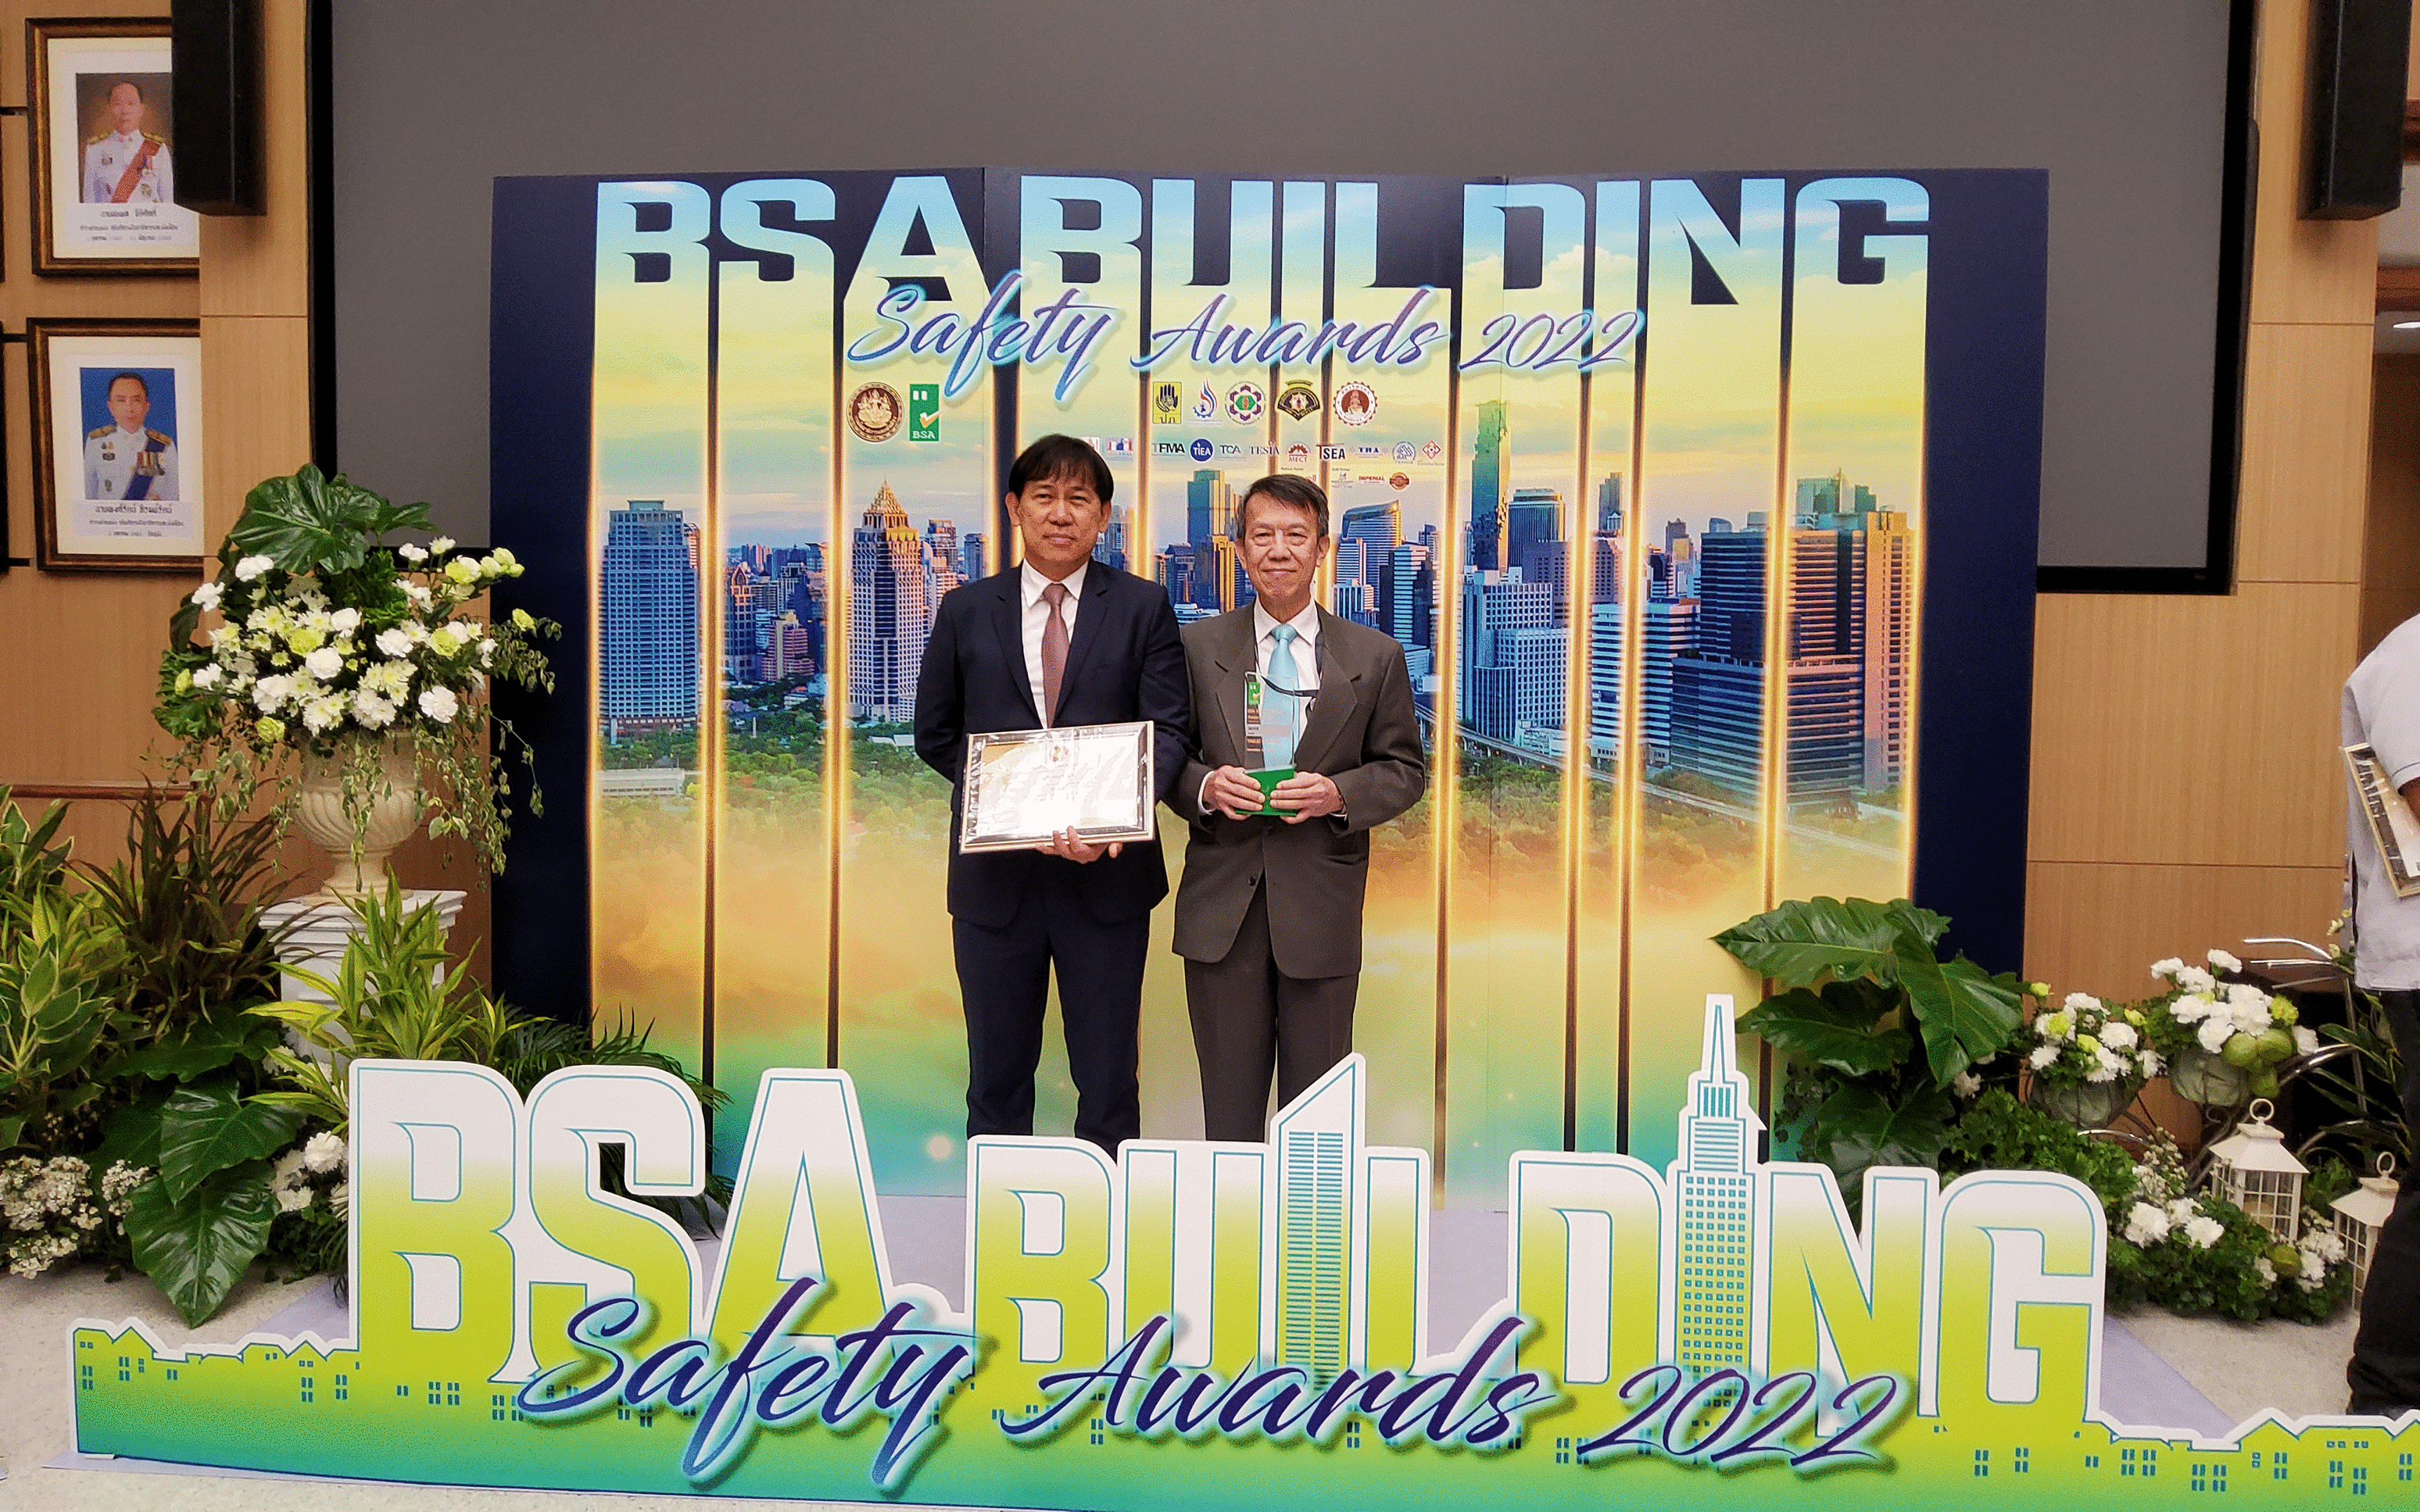 Building Safety Award 2022